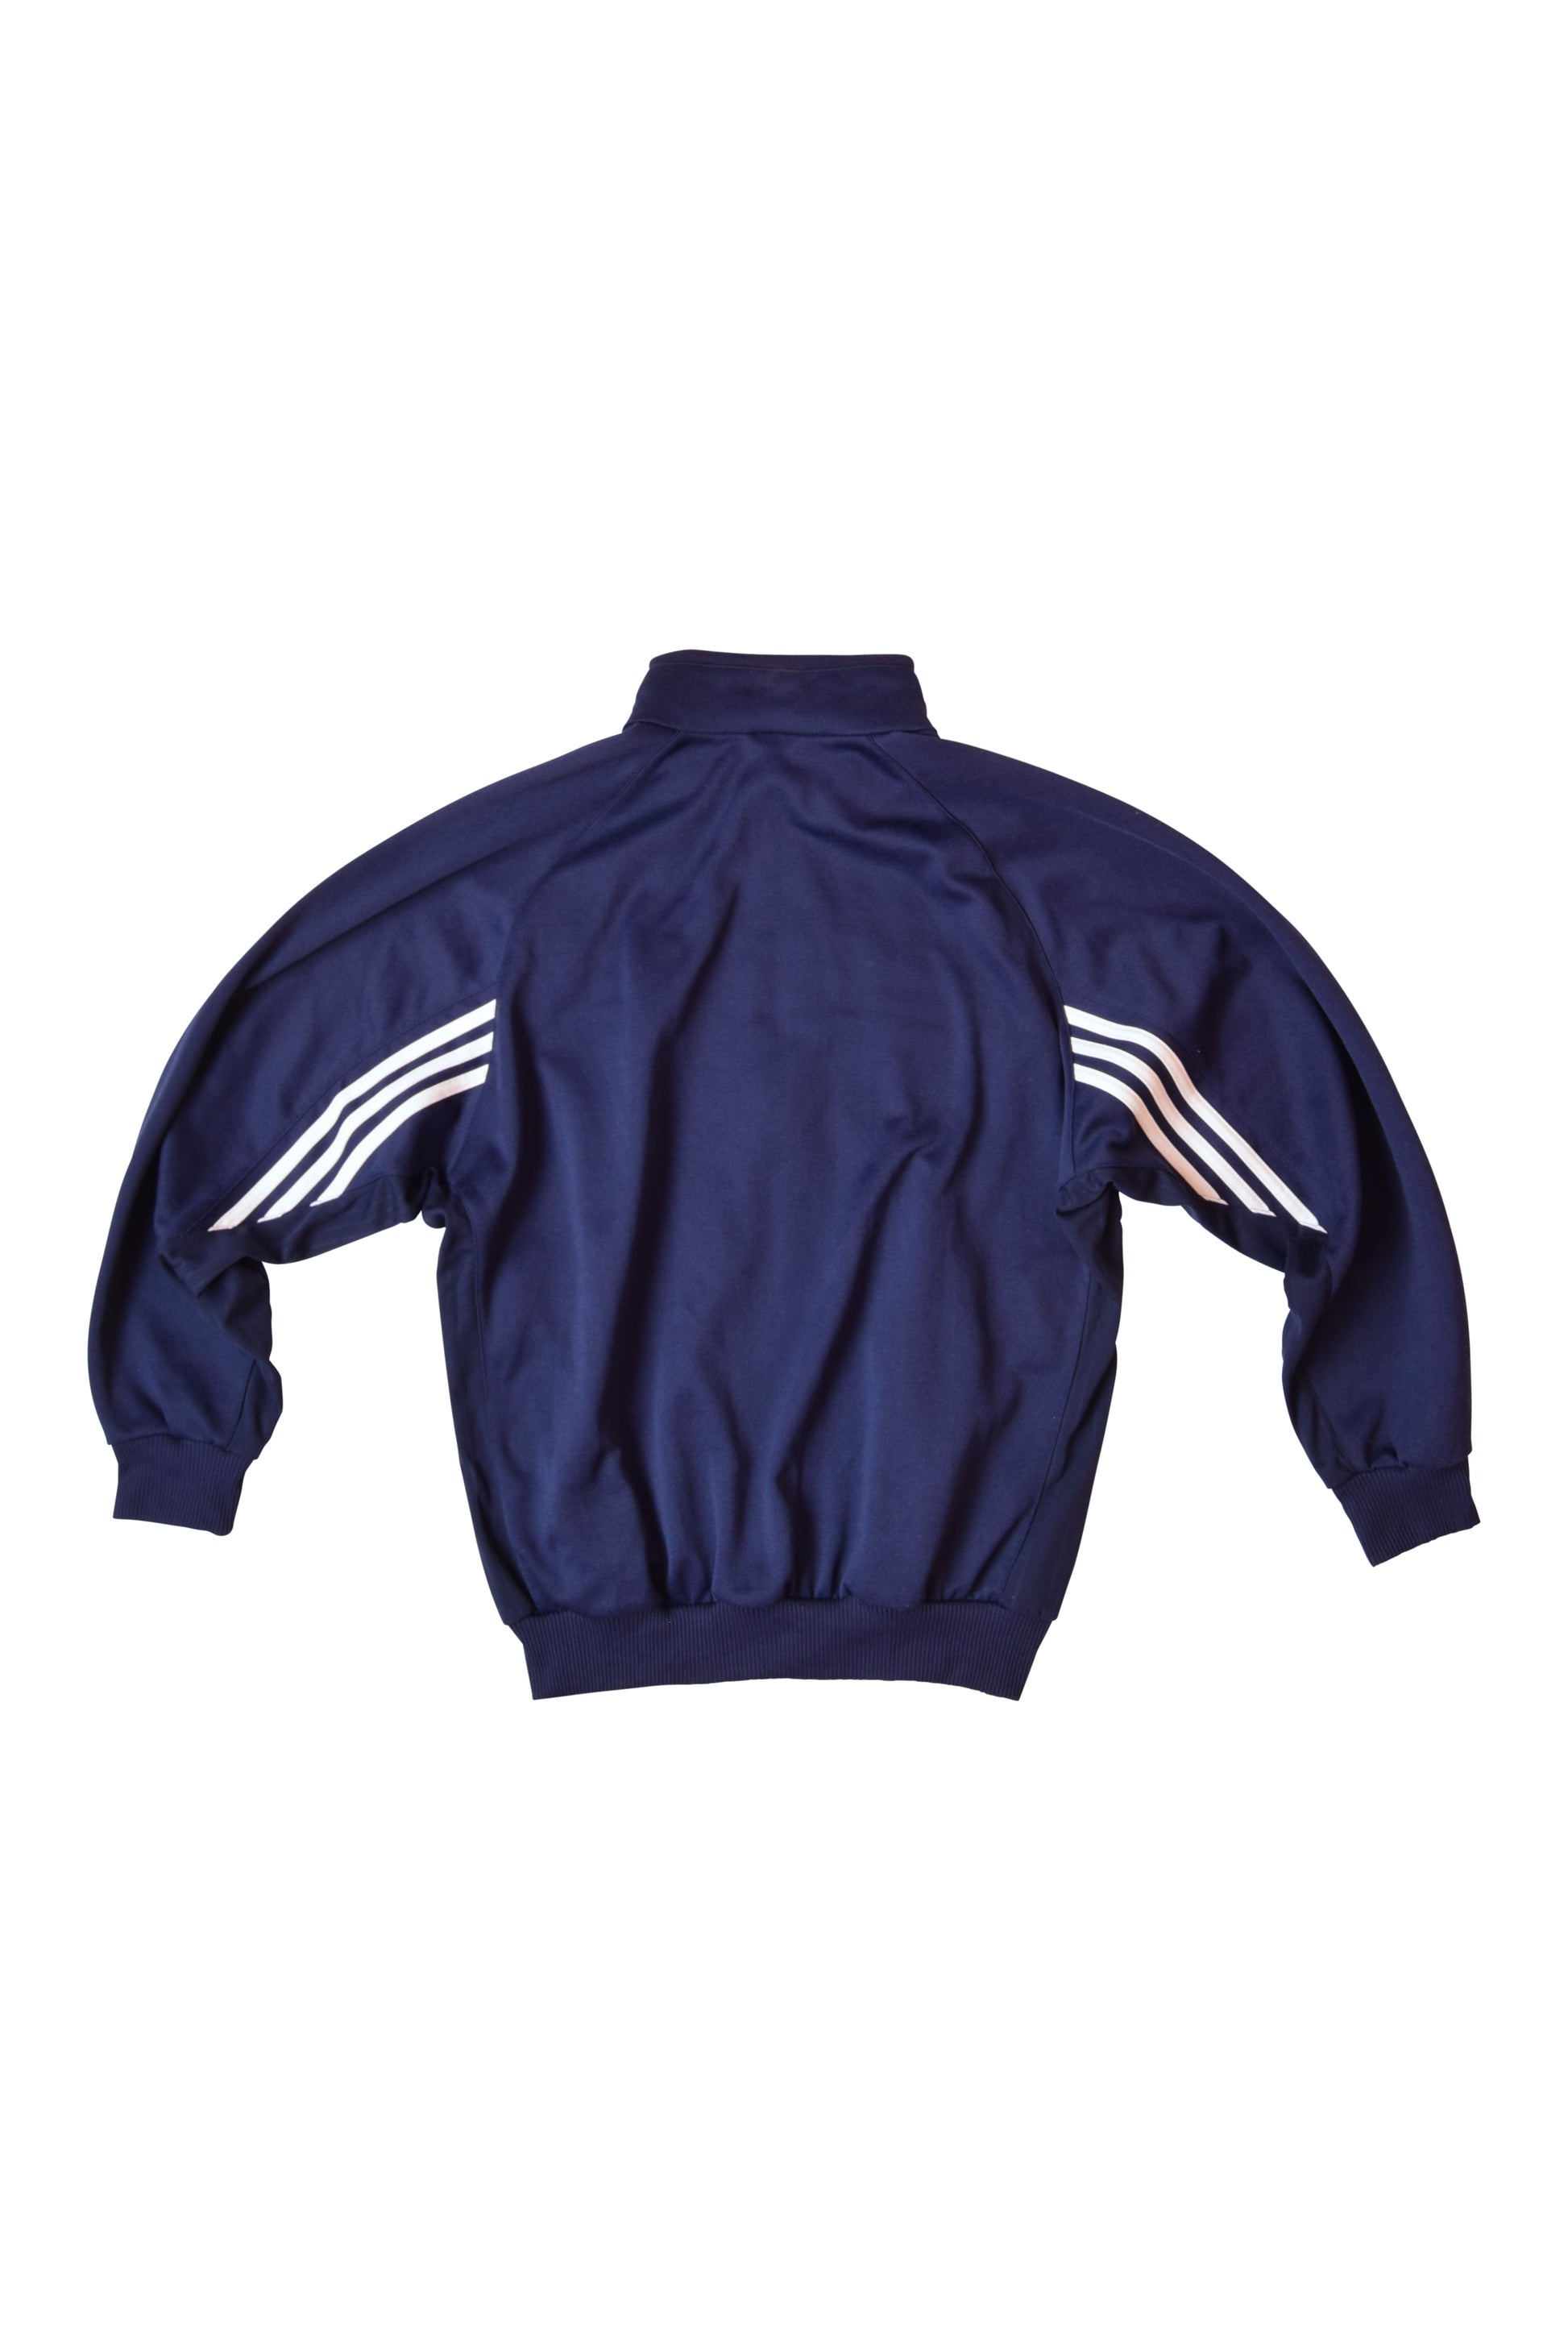 Vintage Adidas Jacket 90's Size M